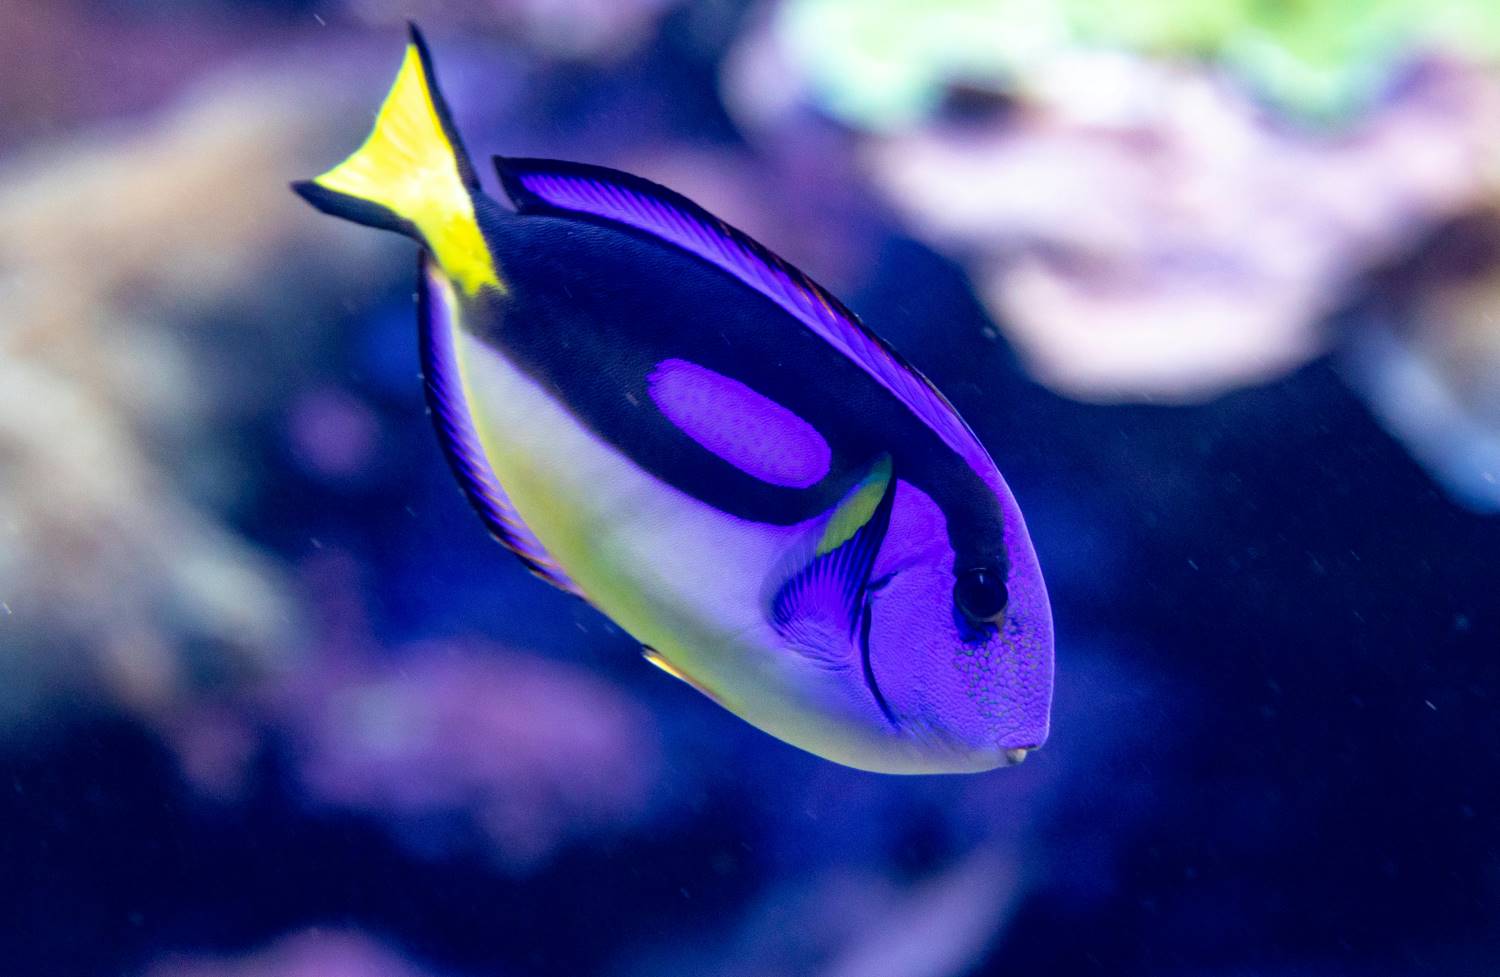 Saltwater Fish for Aquariums - Midas Blenny